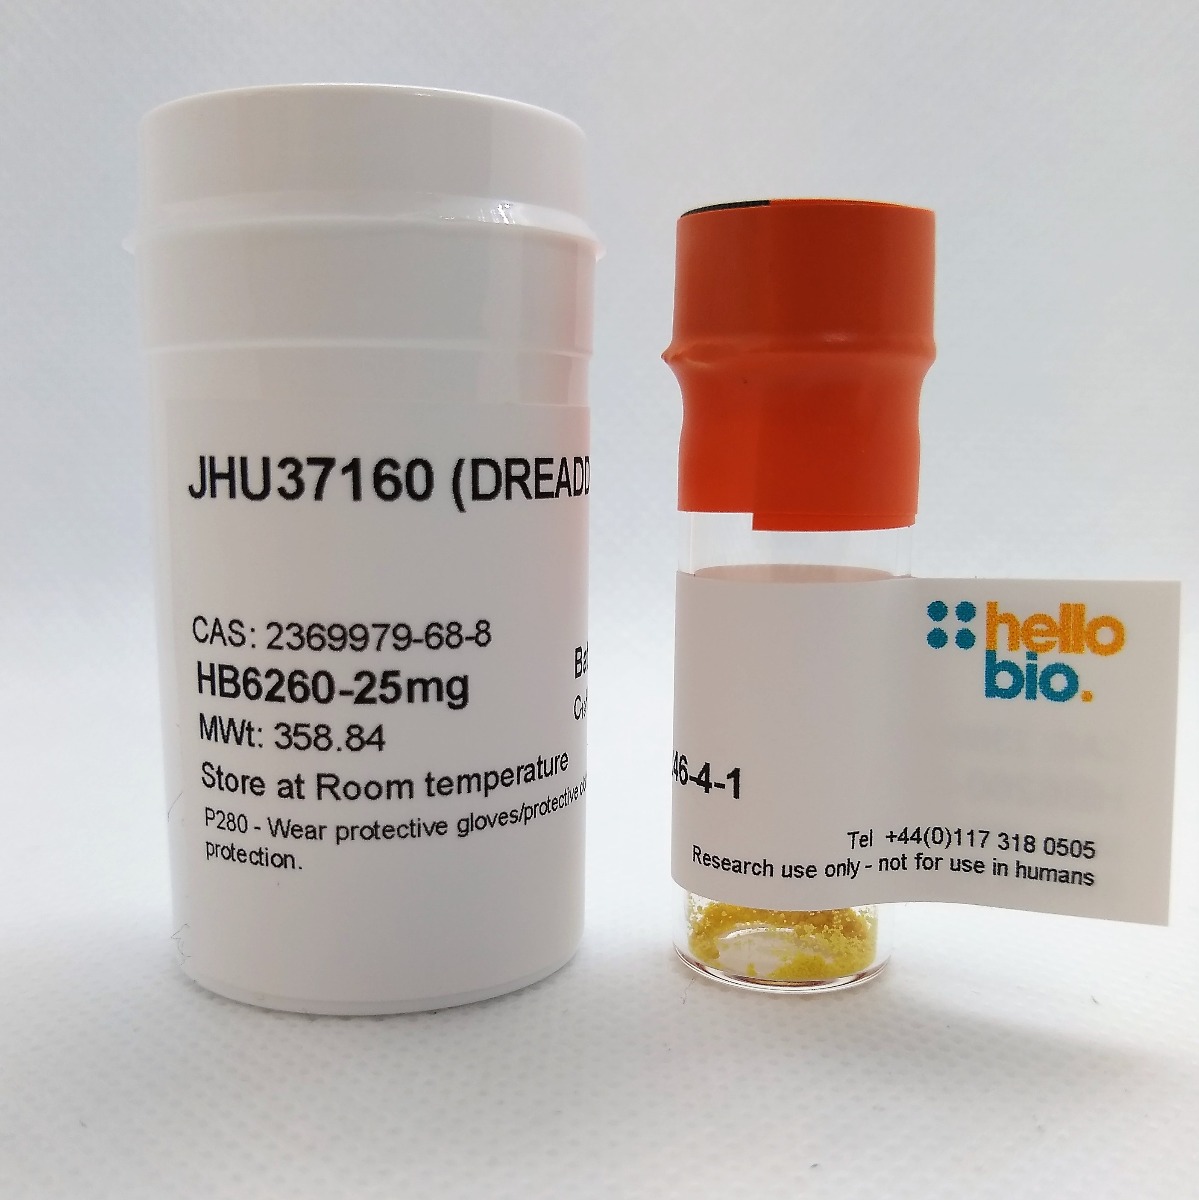 JHU37160 (DREADD ligand) product vial image | Hello Bio